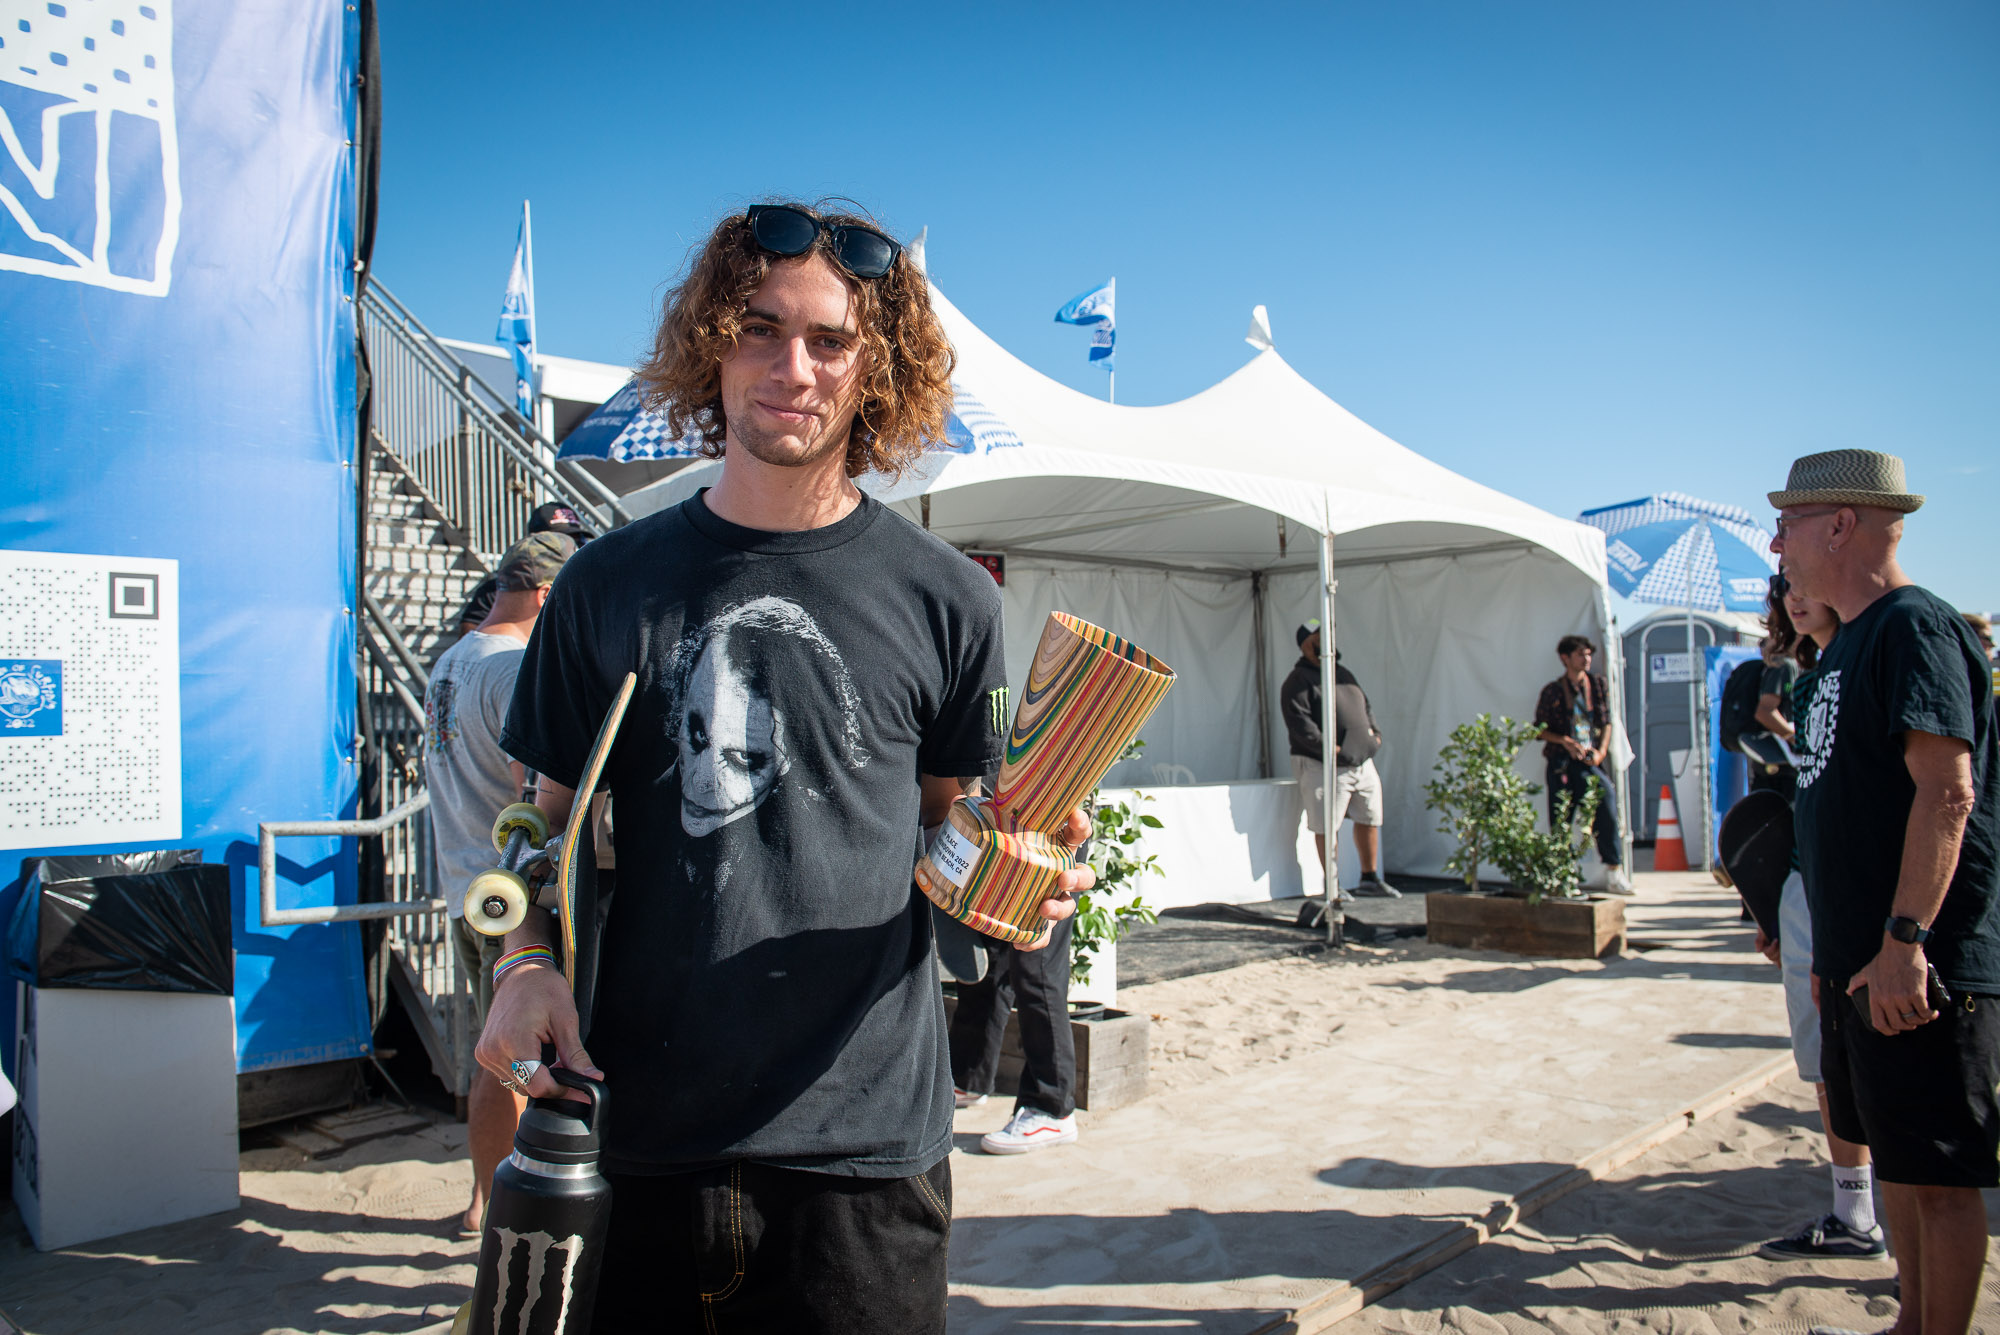 Monster Energy's Braden Hoban from Encinitas, California, took second place at the Vans Showdown in Huntington Beach